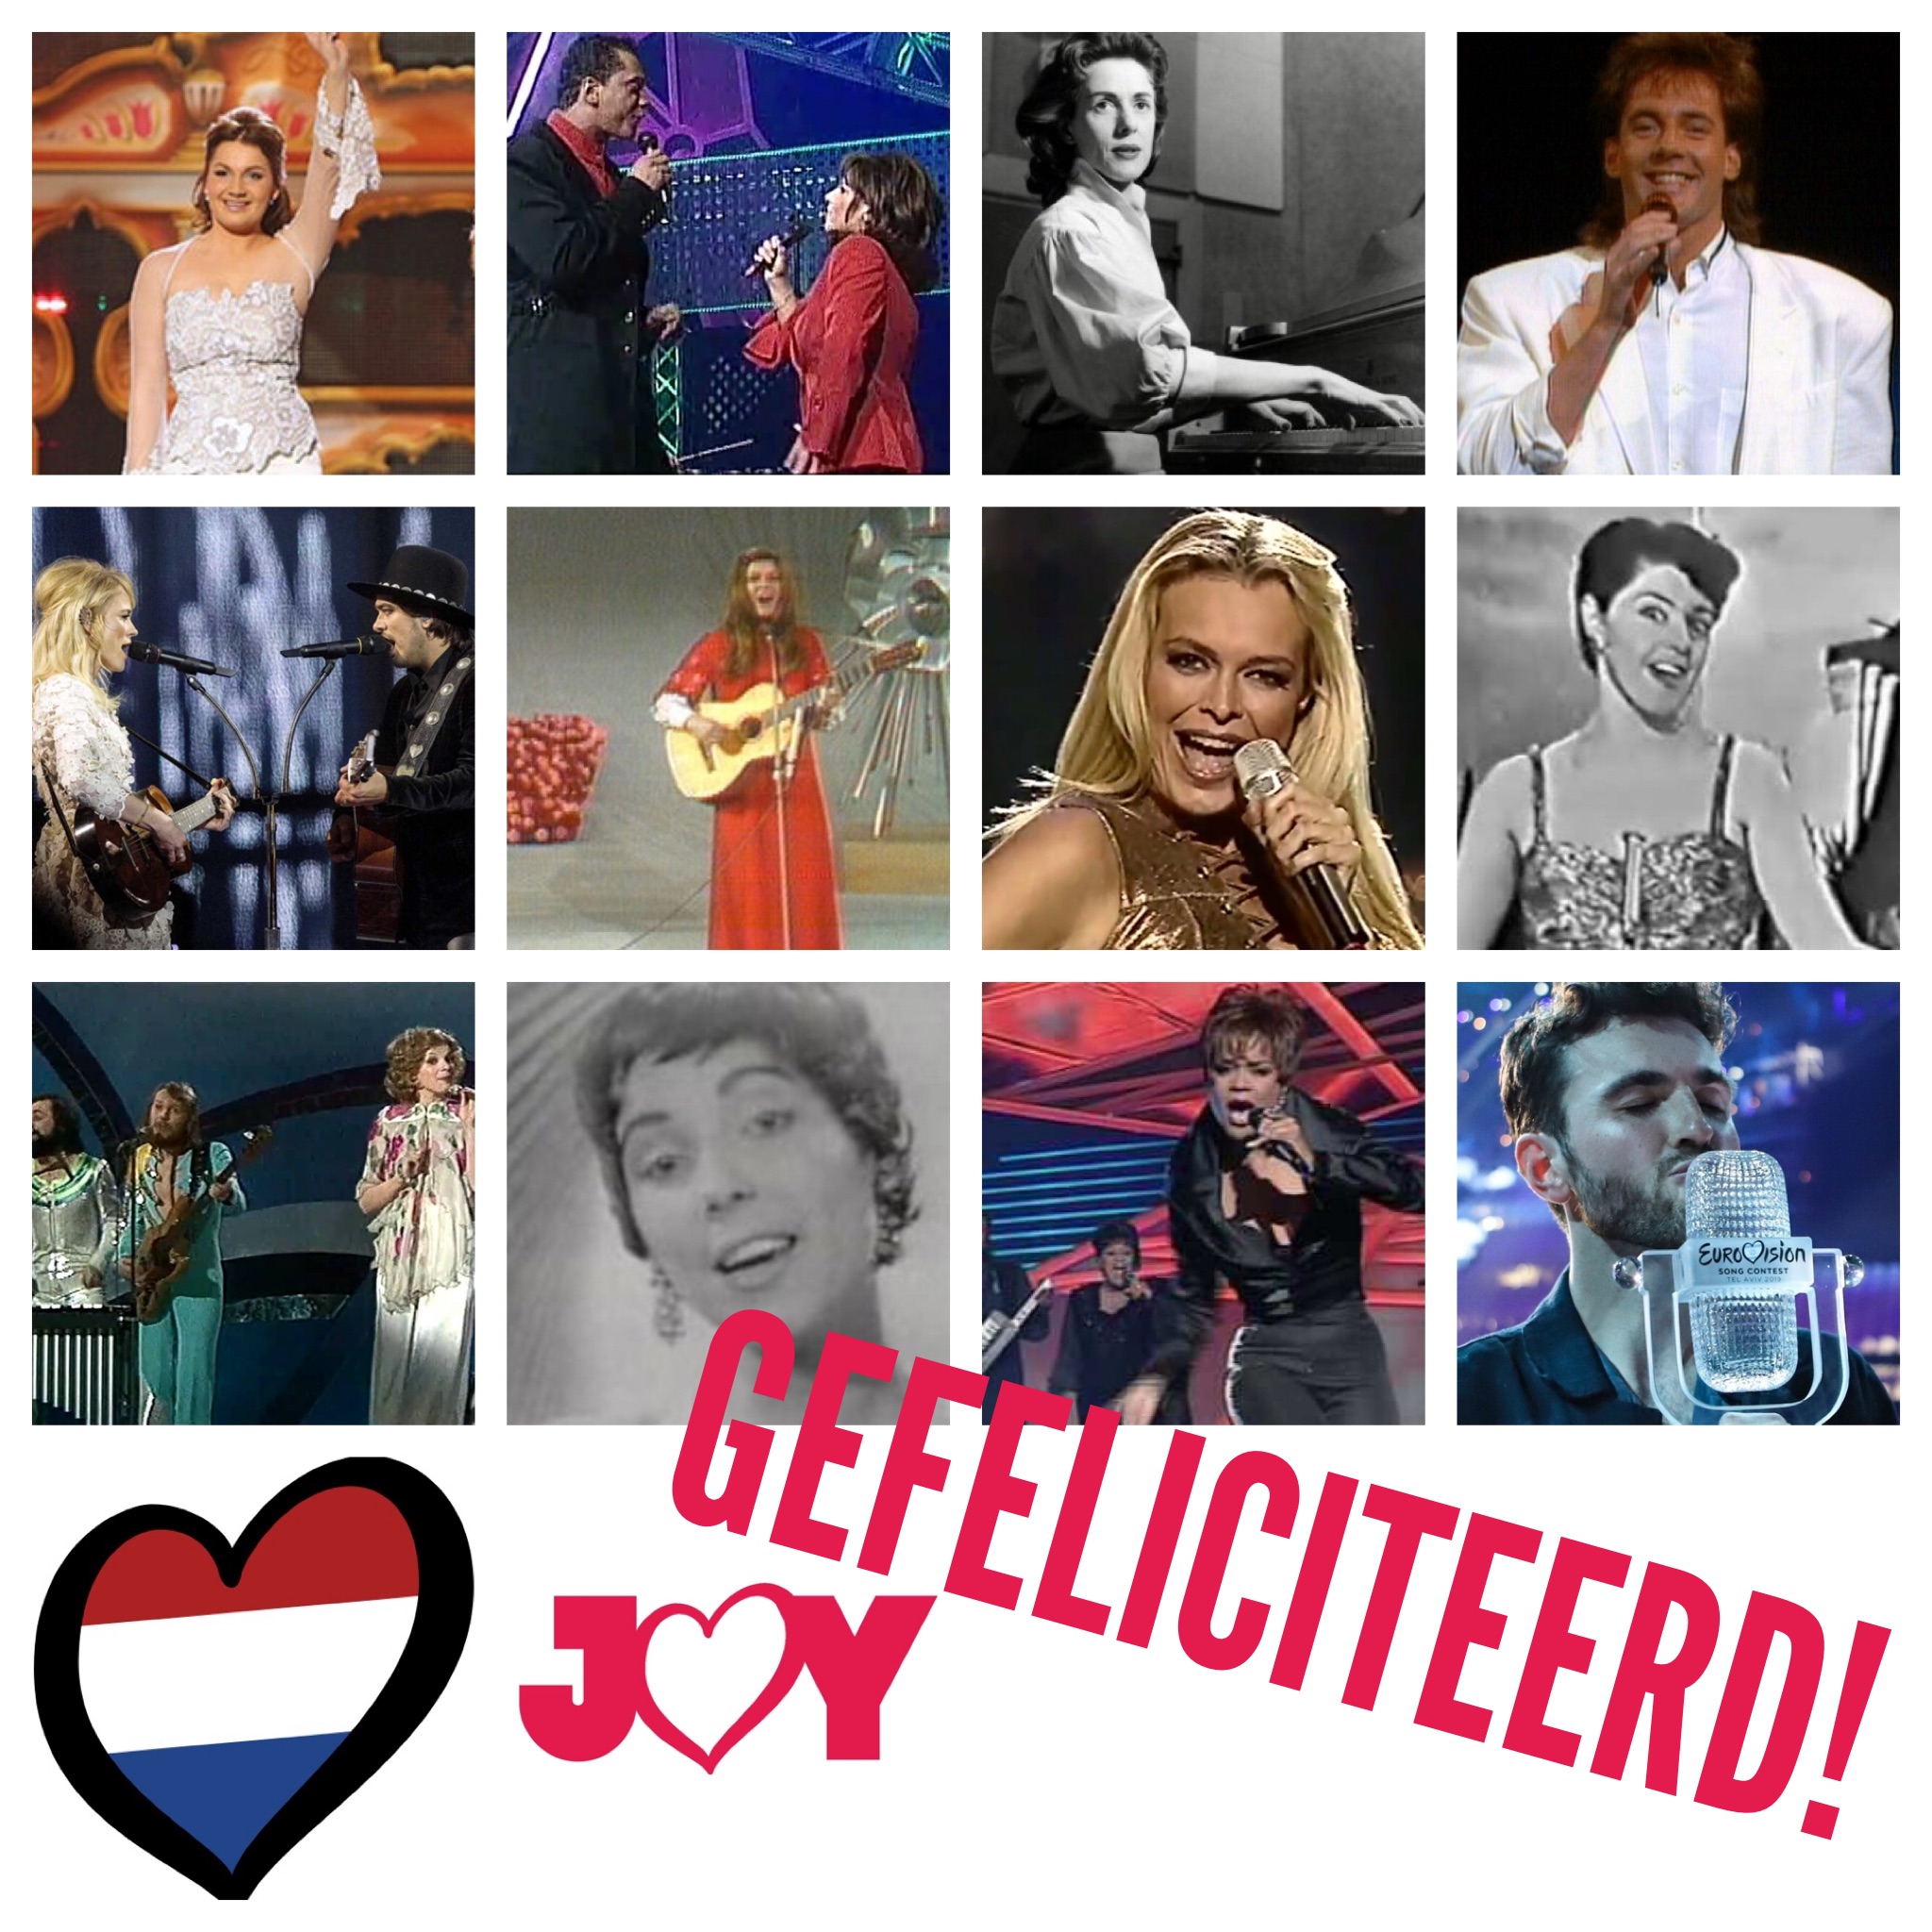 Gefeliciteerd! Celebrating The Netherlands’ 2019 Eurovision Win